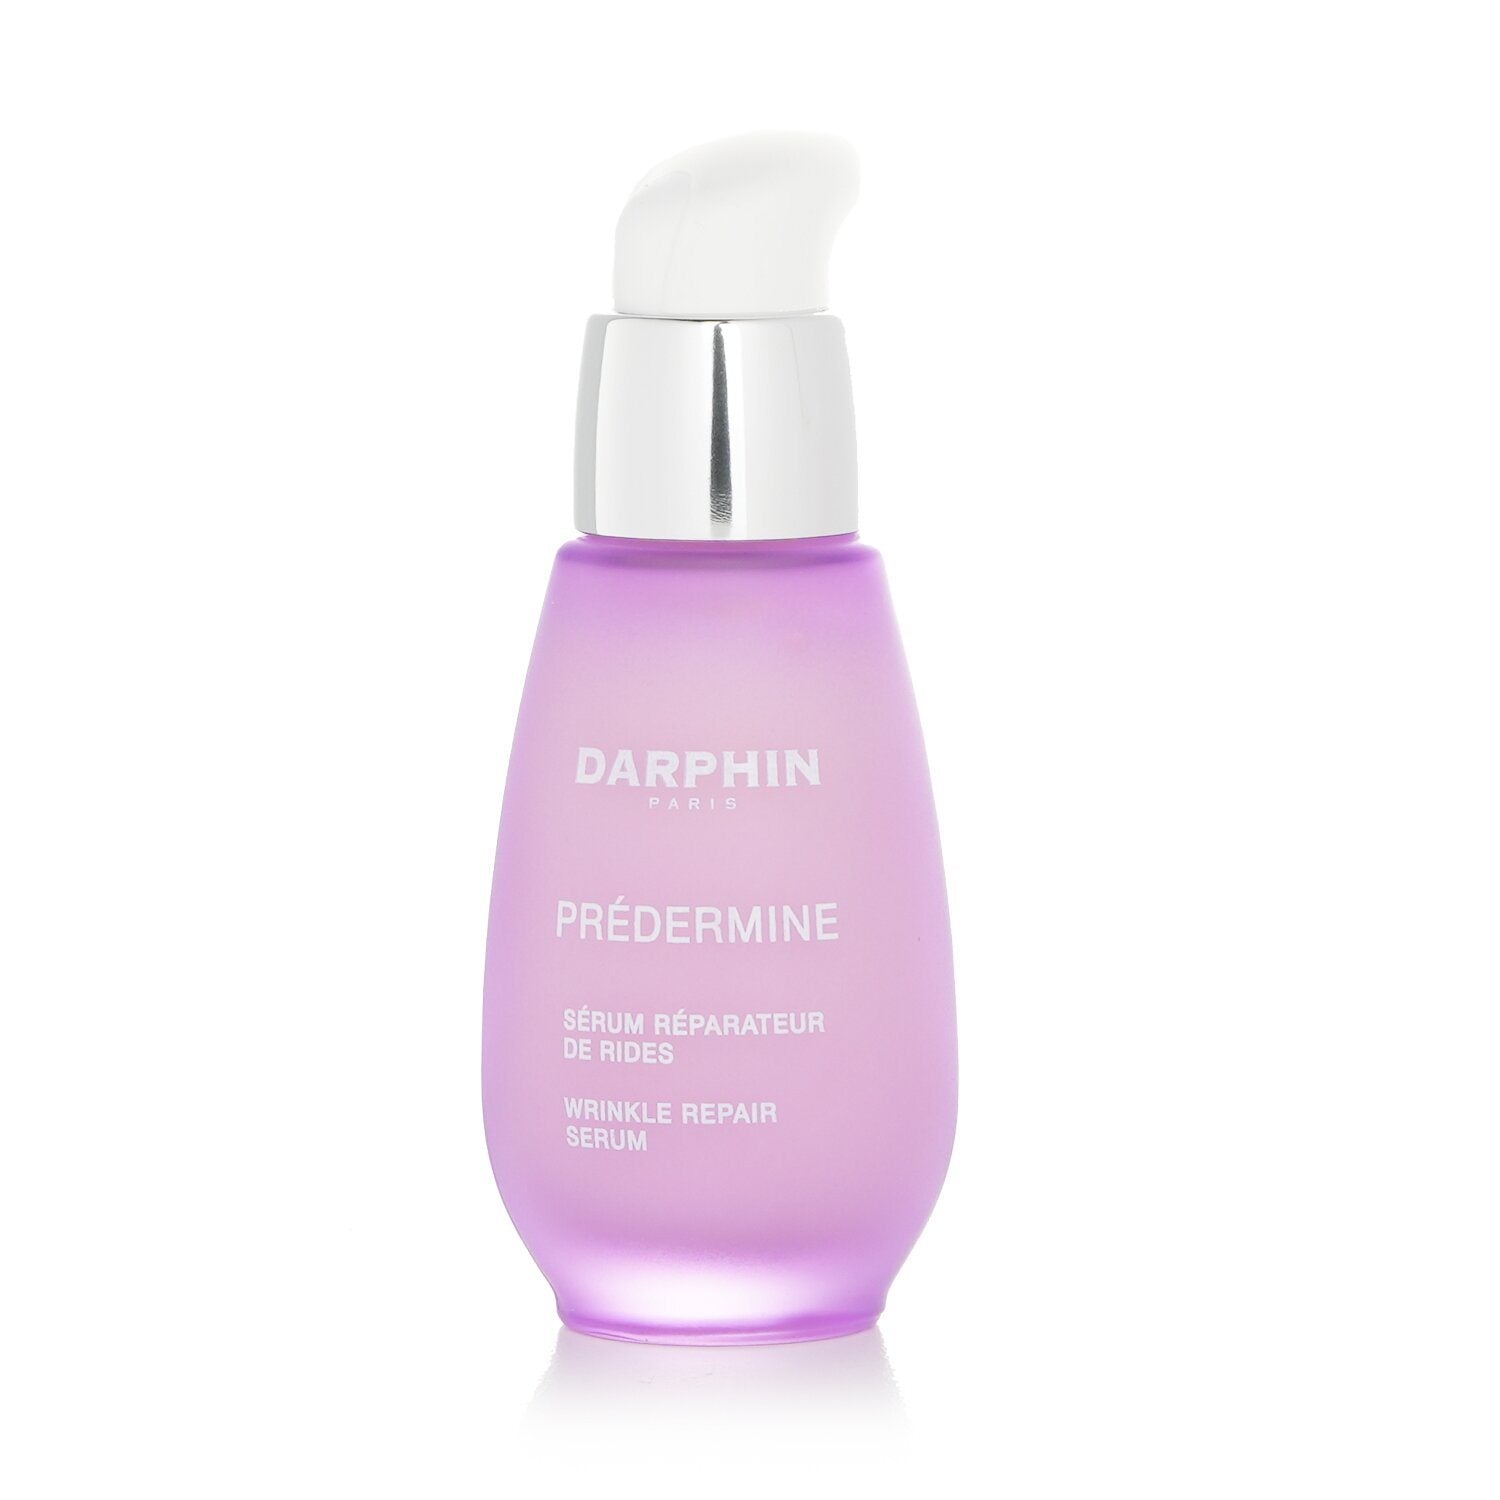 DARPHIN - Predermine Wrinkle Repair Serum - 30ml/1oz 3P's Inclusive Beauty